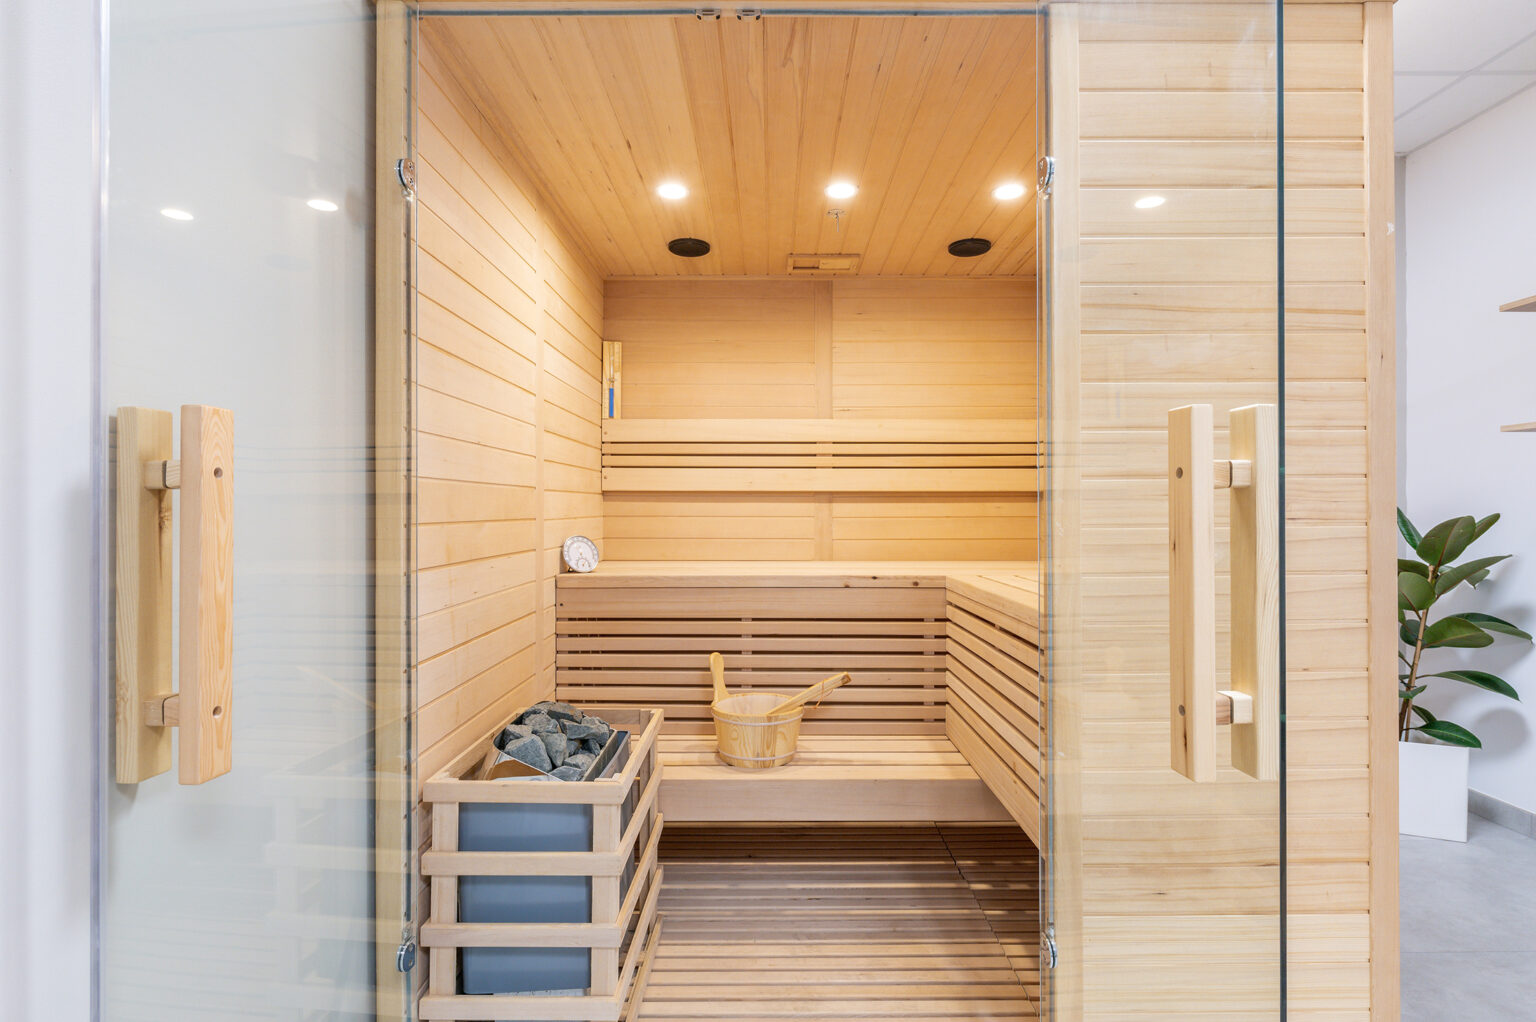 Sauna en bois - Espace sauna à domcile